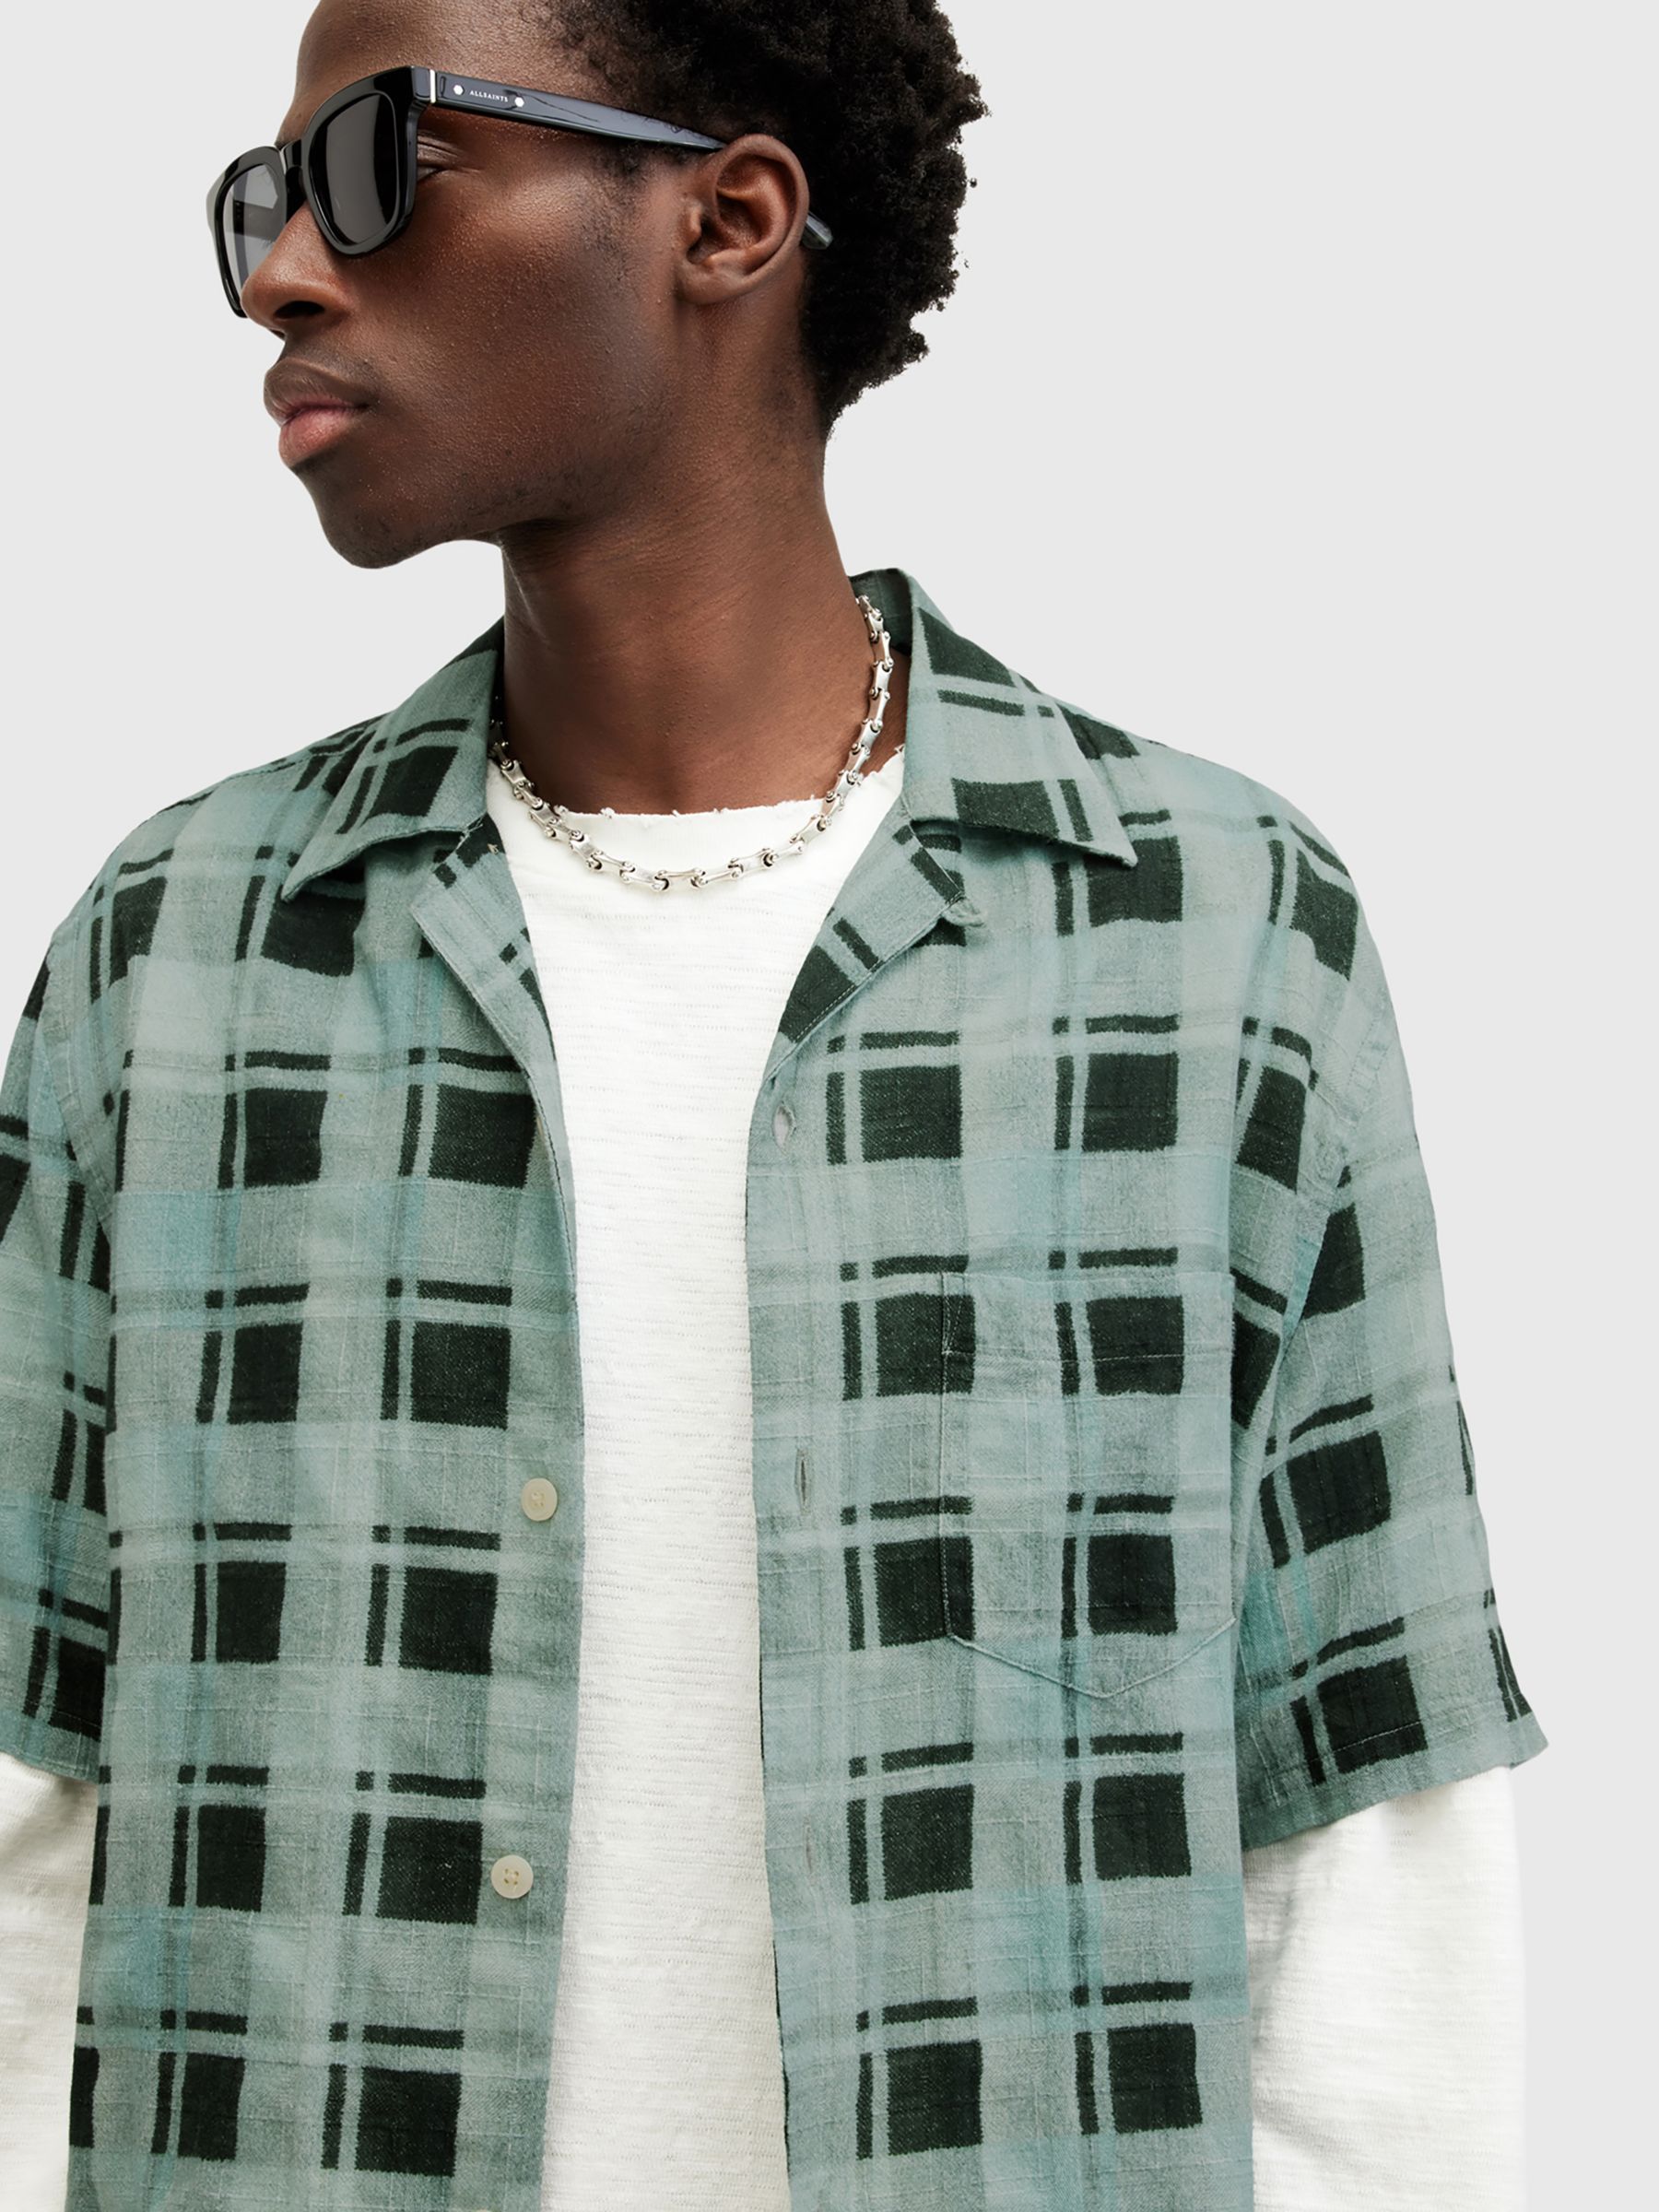 AllSaints Big Sur Organic Cotton Blend Check Short Sleeve Shirt, Shamrock Green, XL